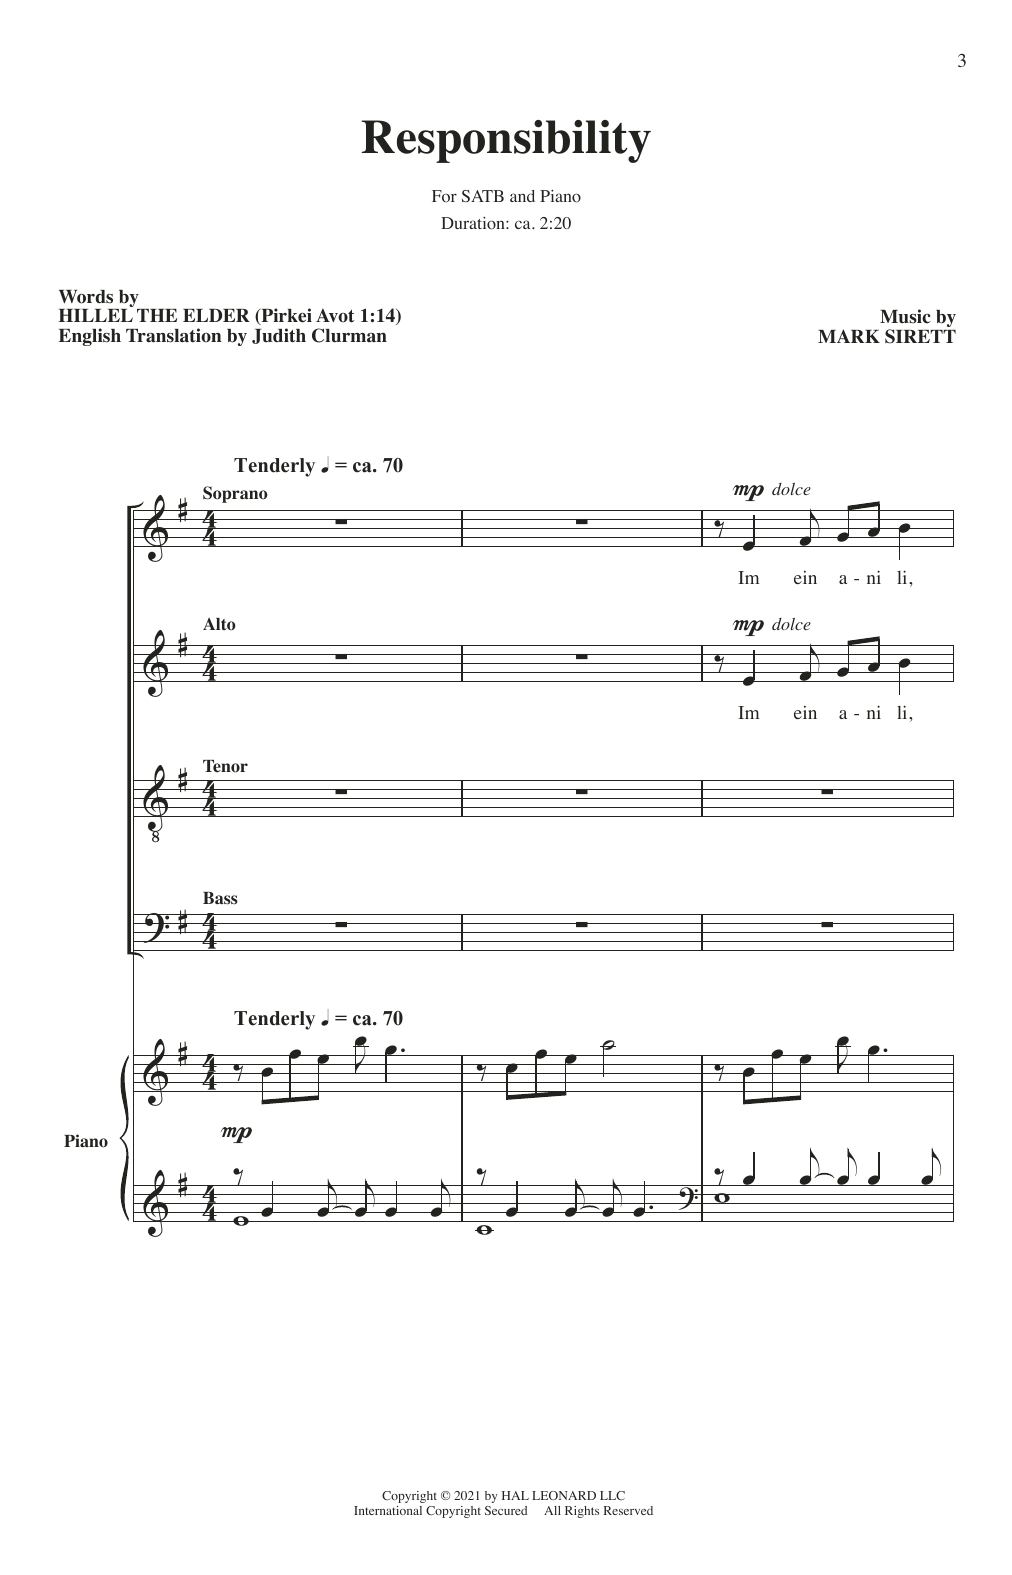 Mark Sirett Responsibility Sheet Music Notes & Chords for SATB Choir - Download or Print PDF